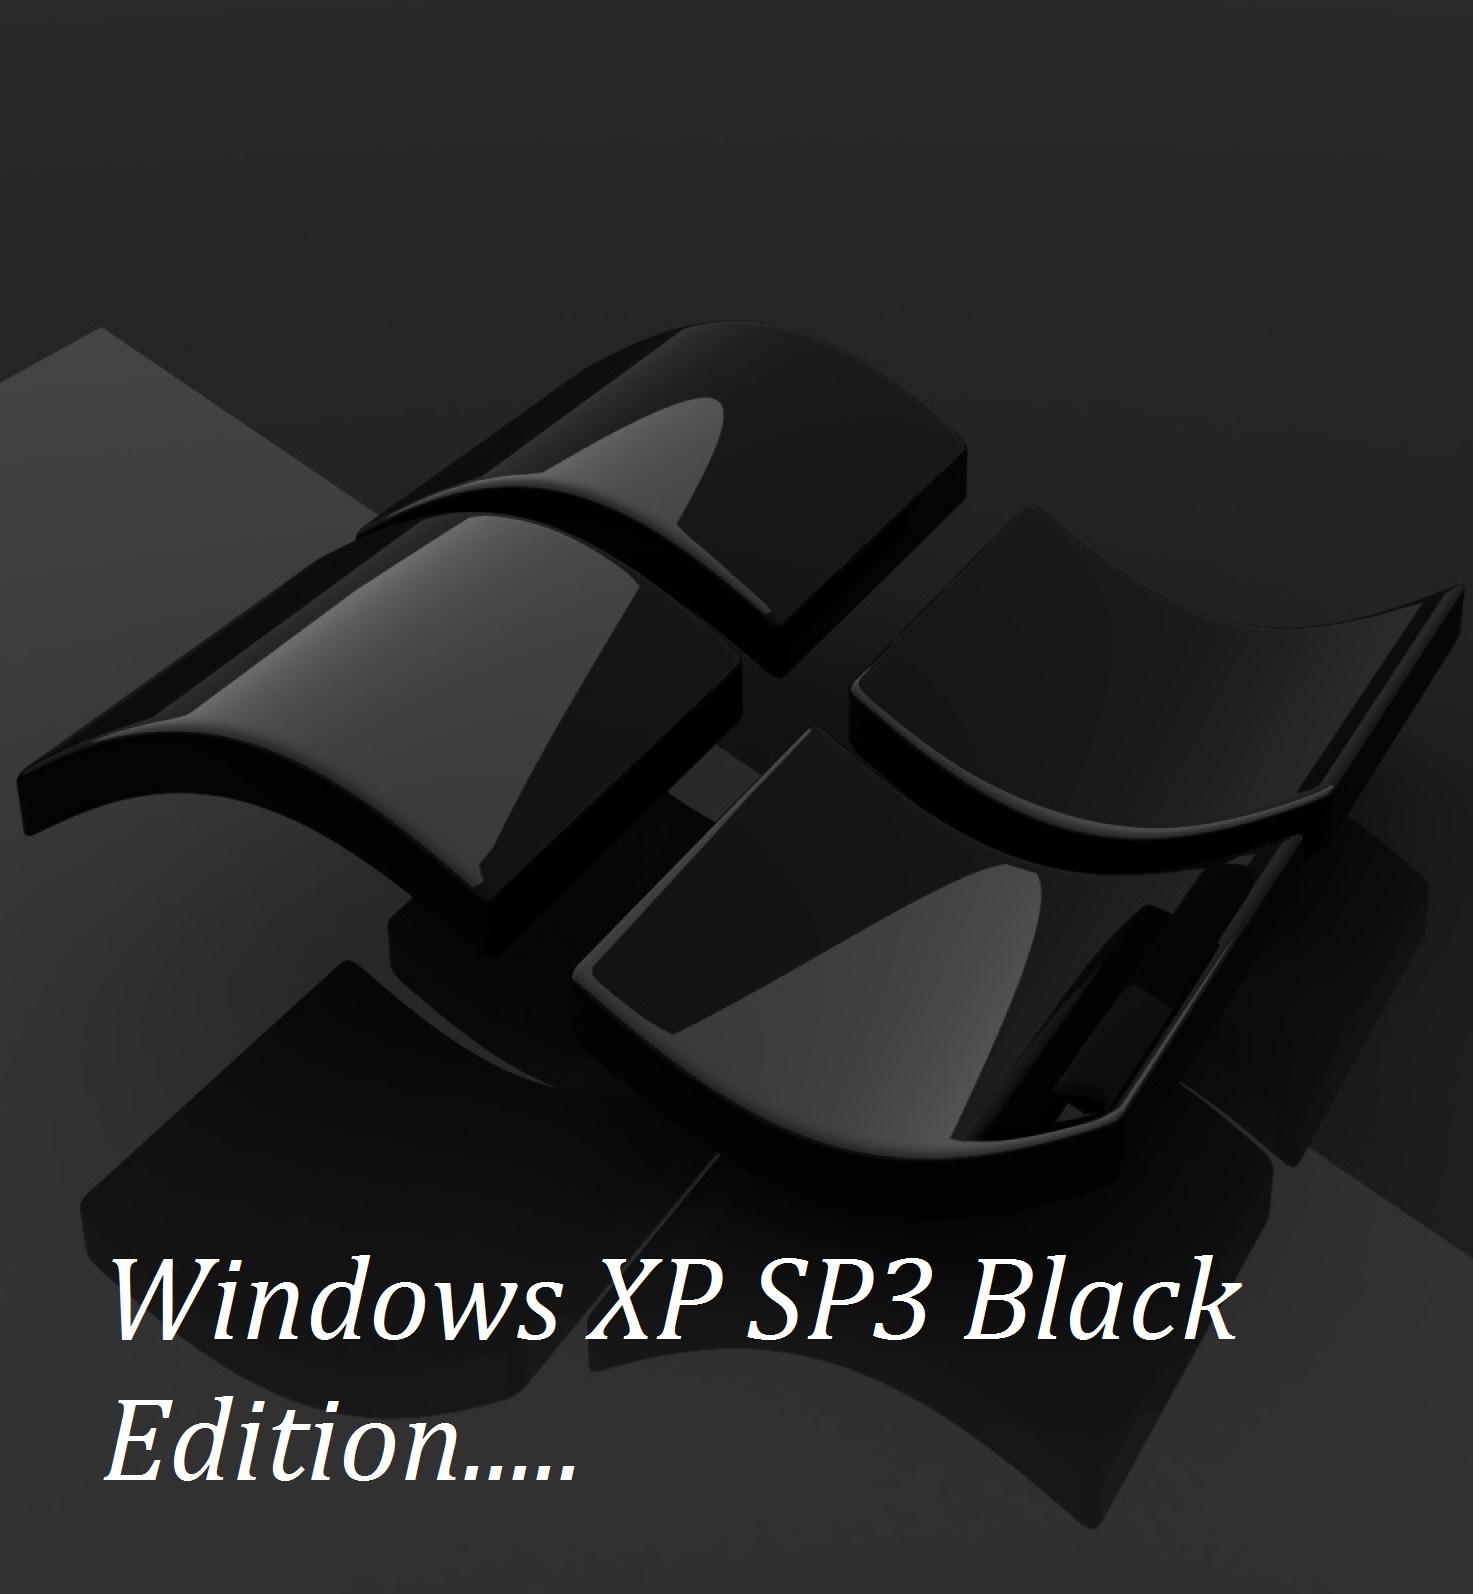 windows xp black edition all drivers